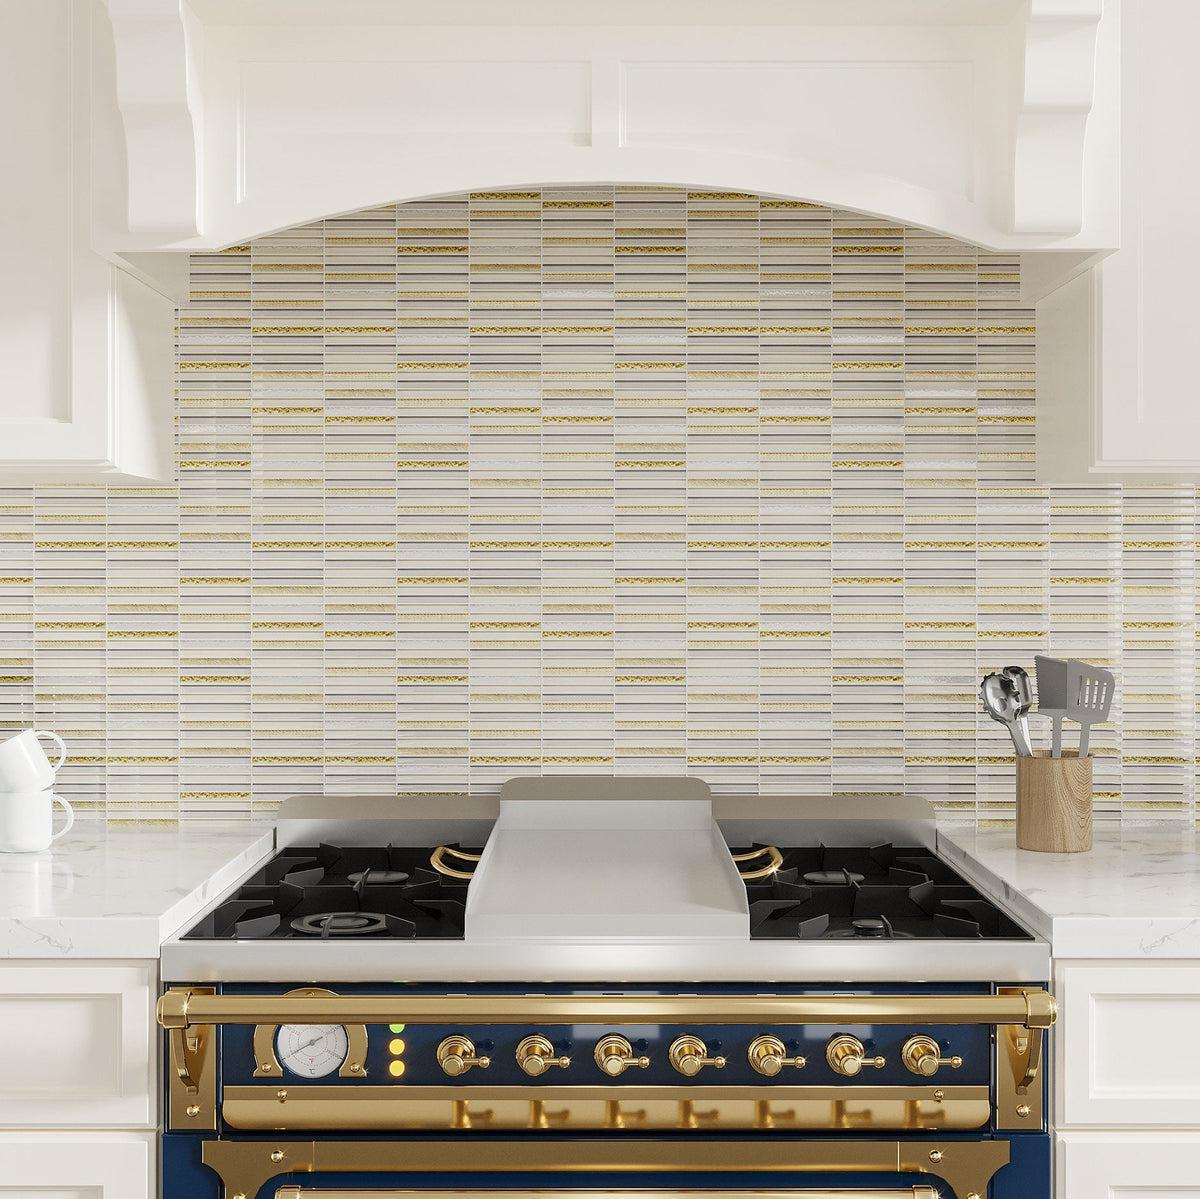 White and gold glass backsplash tile behind kitchen stove range